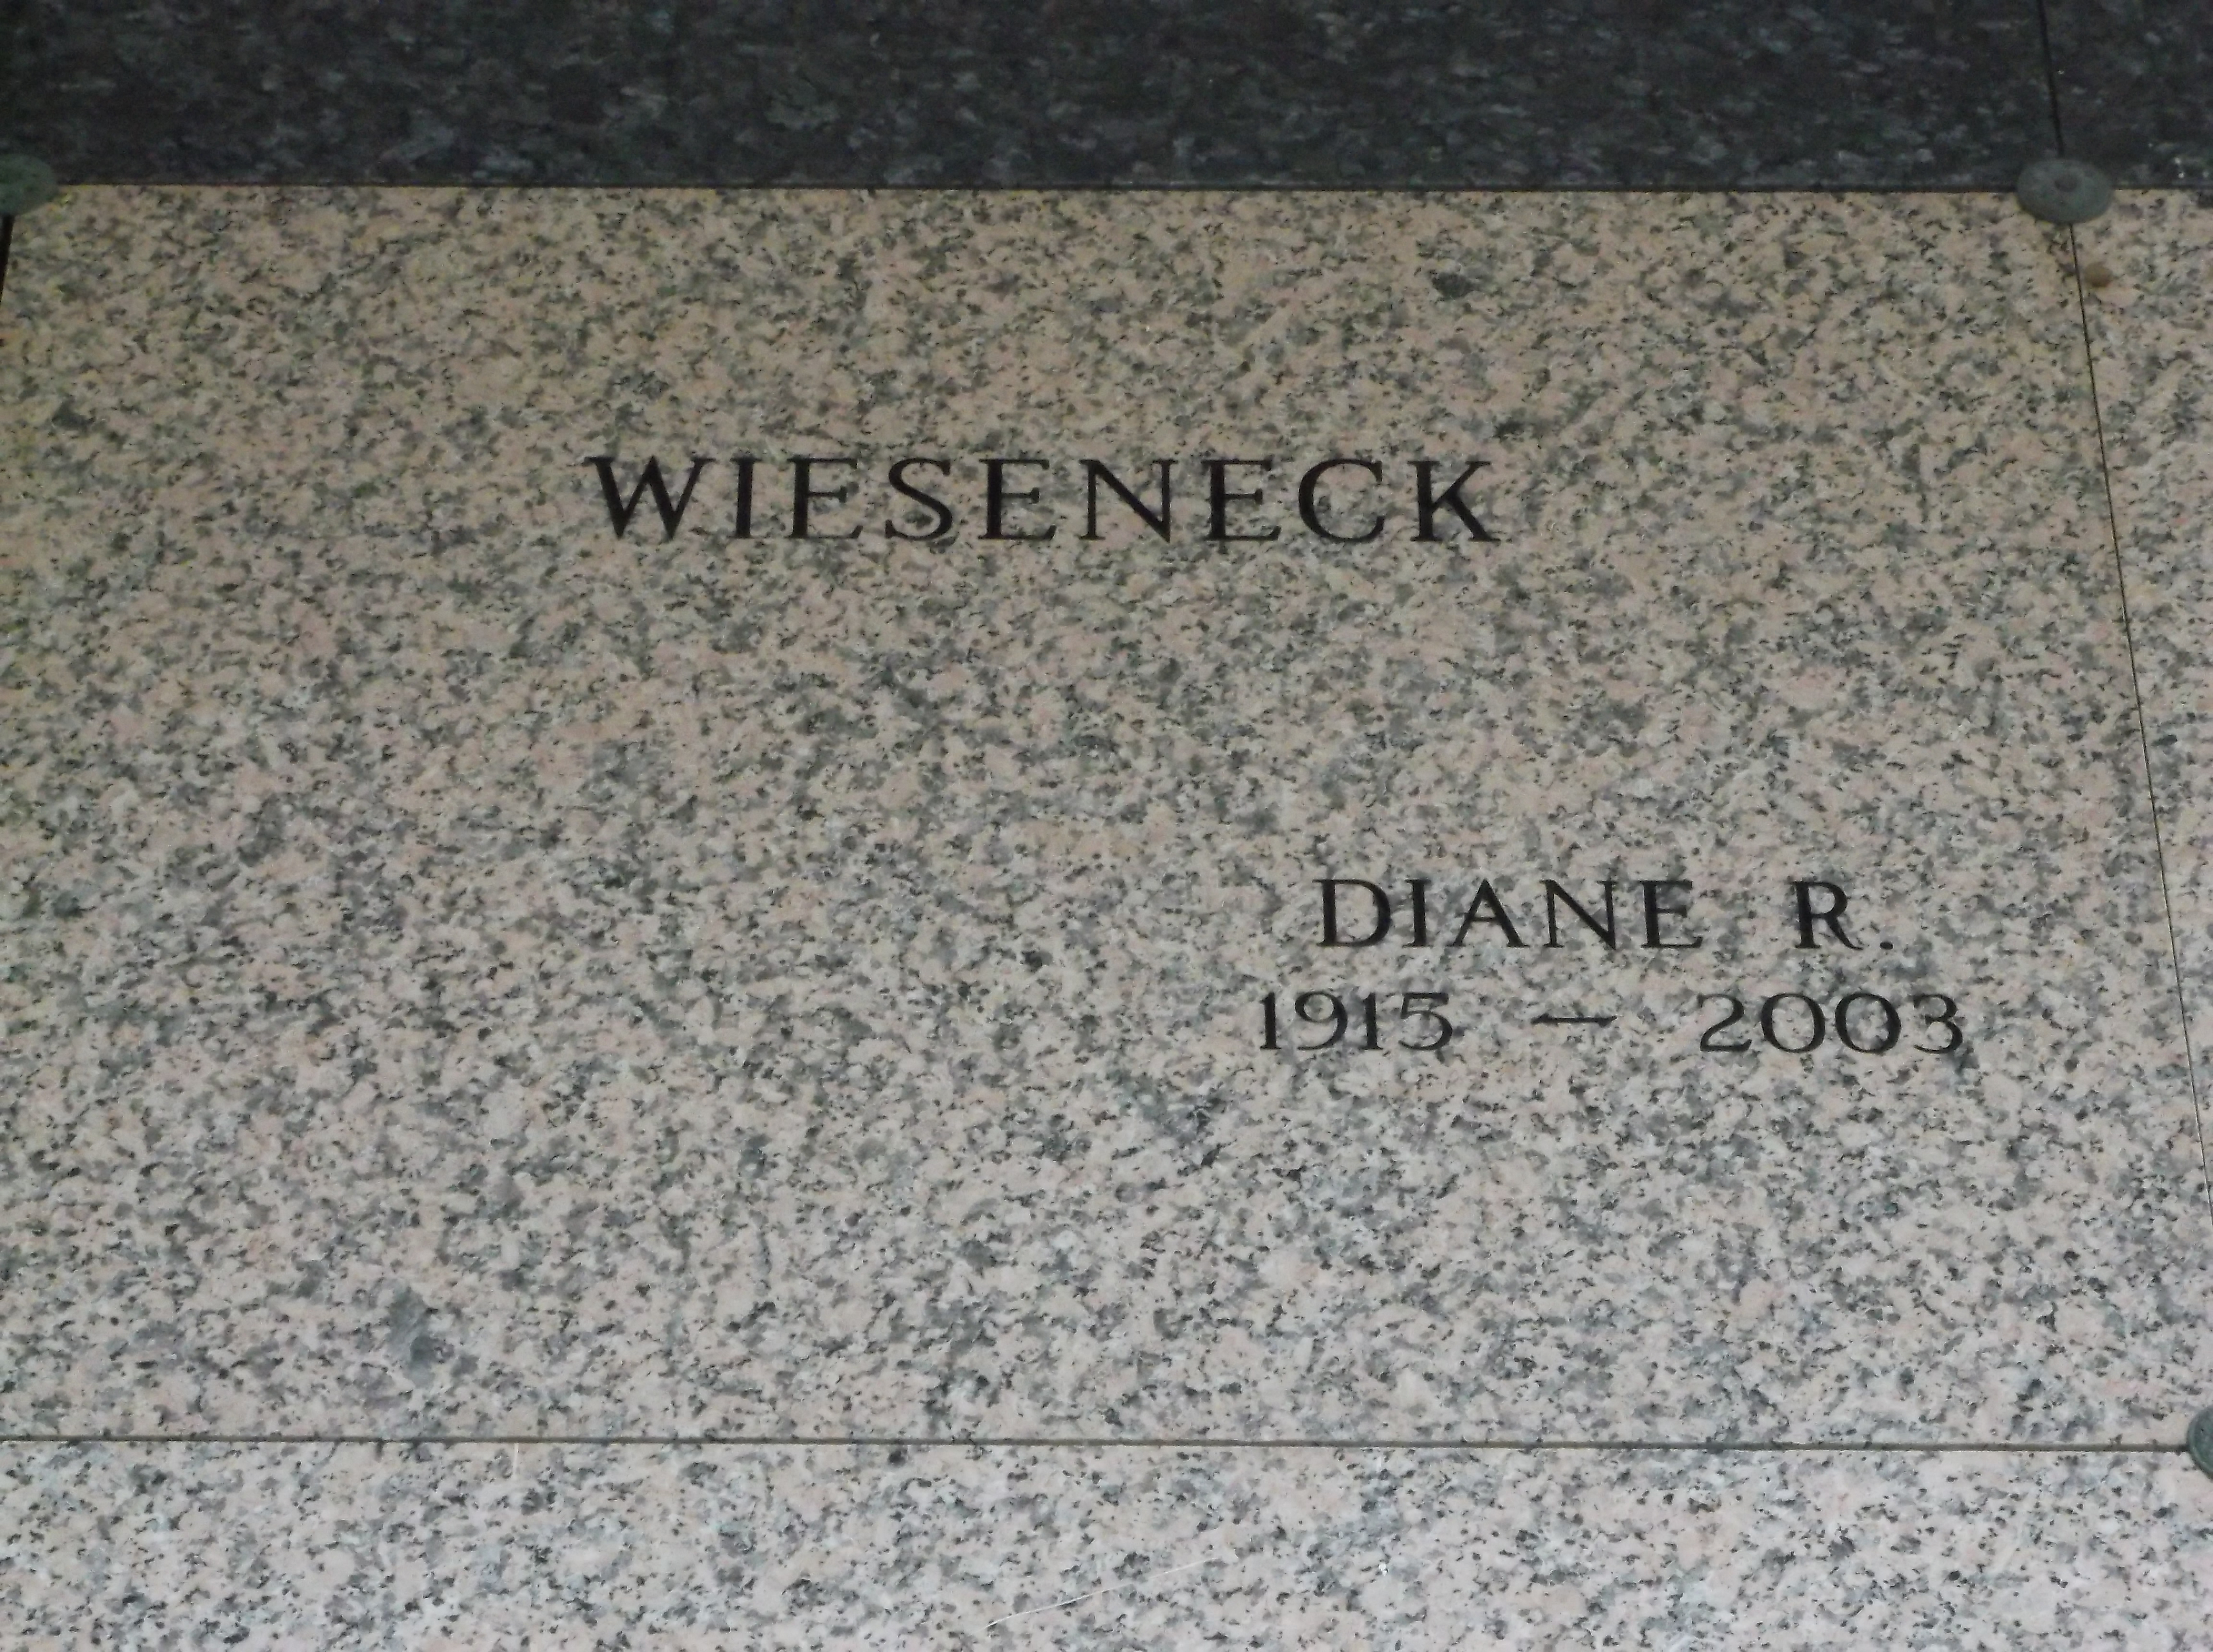 Diane R Wieseneck